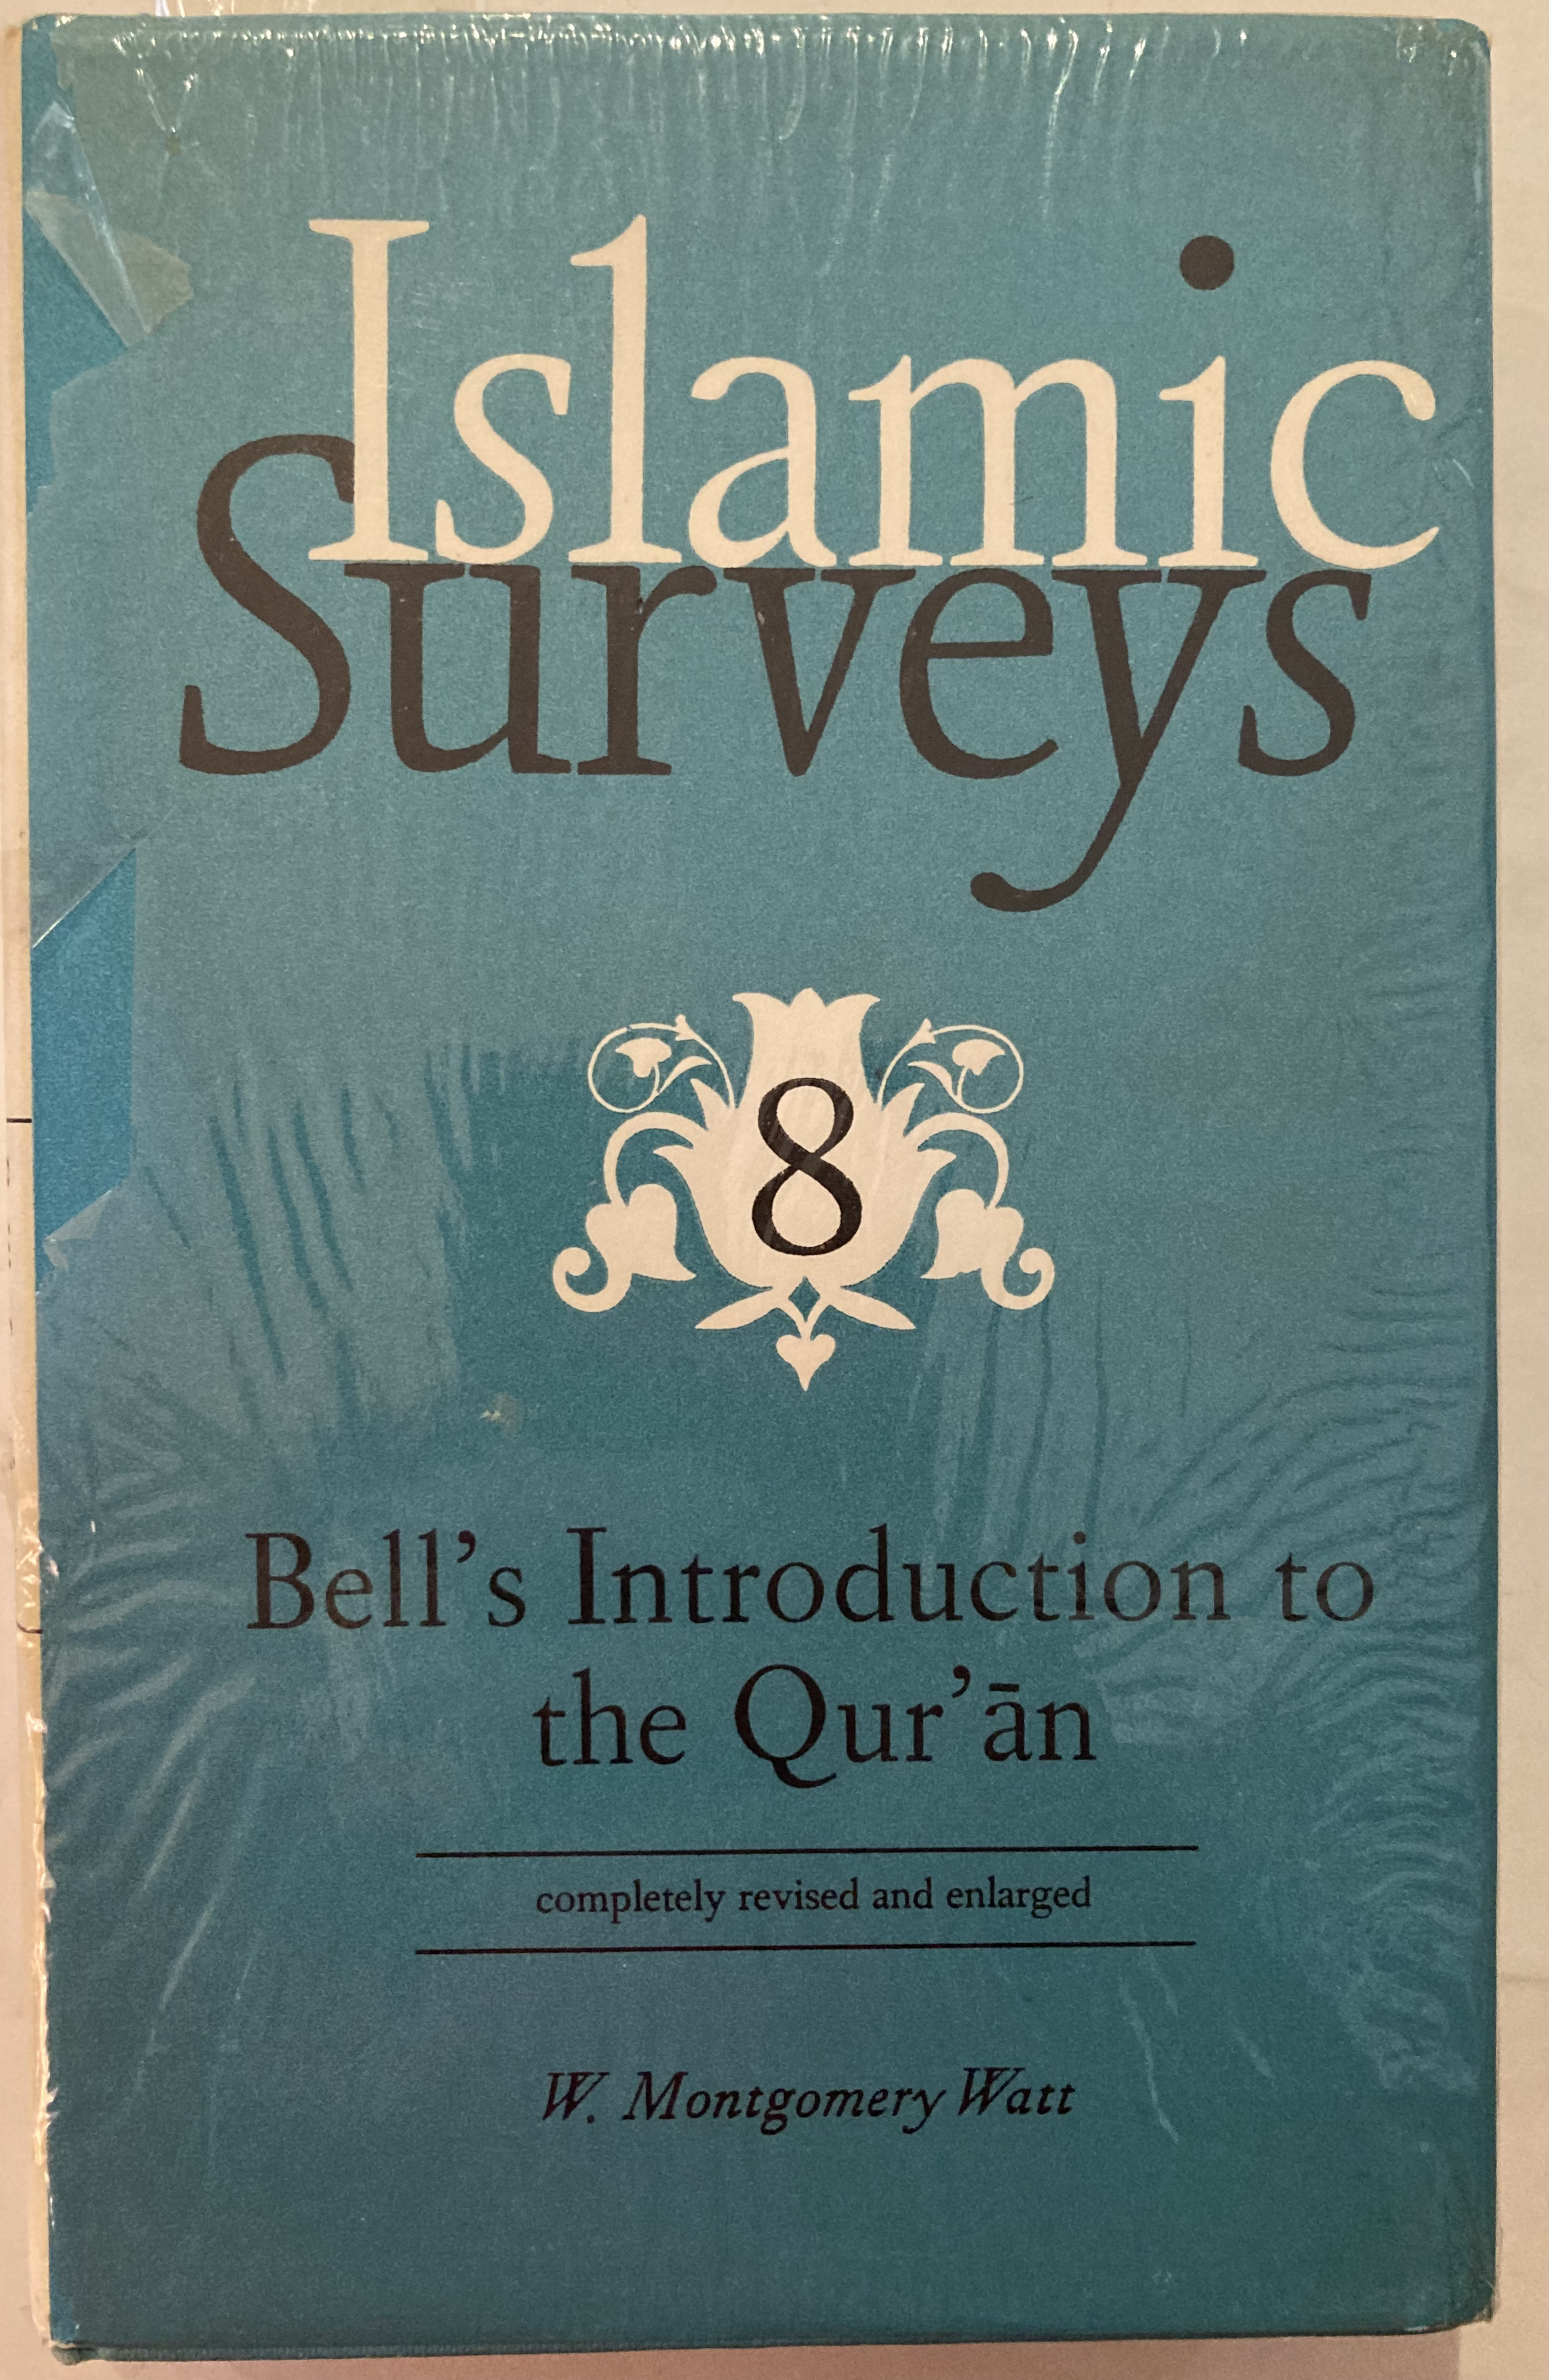 Bell's Introduction to the Qur'an (Islamic surveys, 8) - Richard Bell; W Montgomery Watt